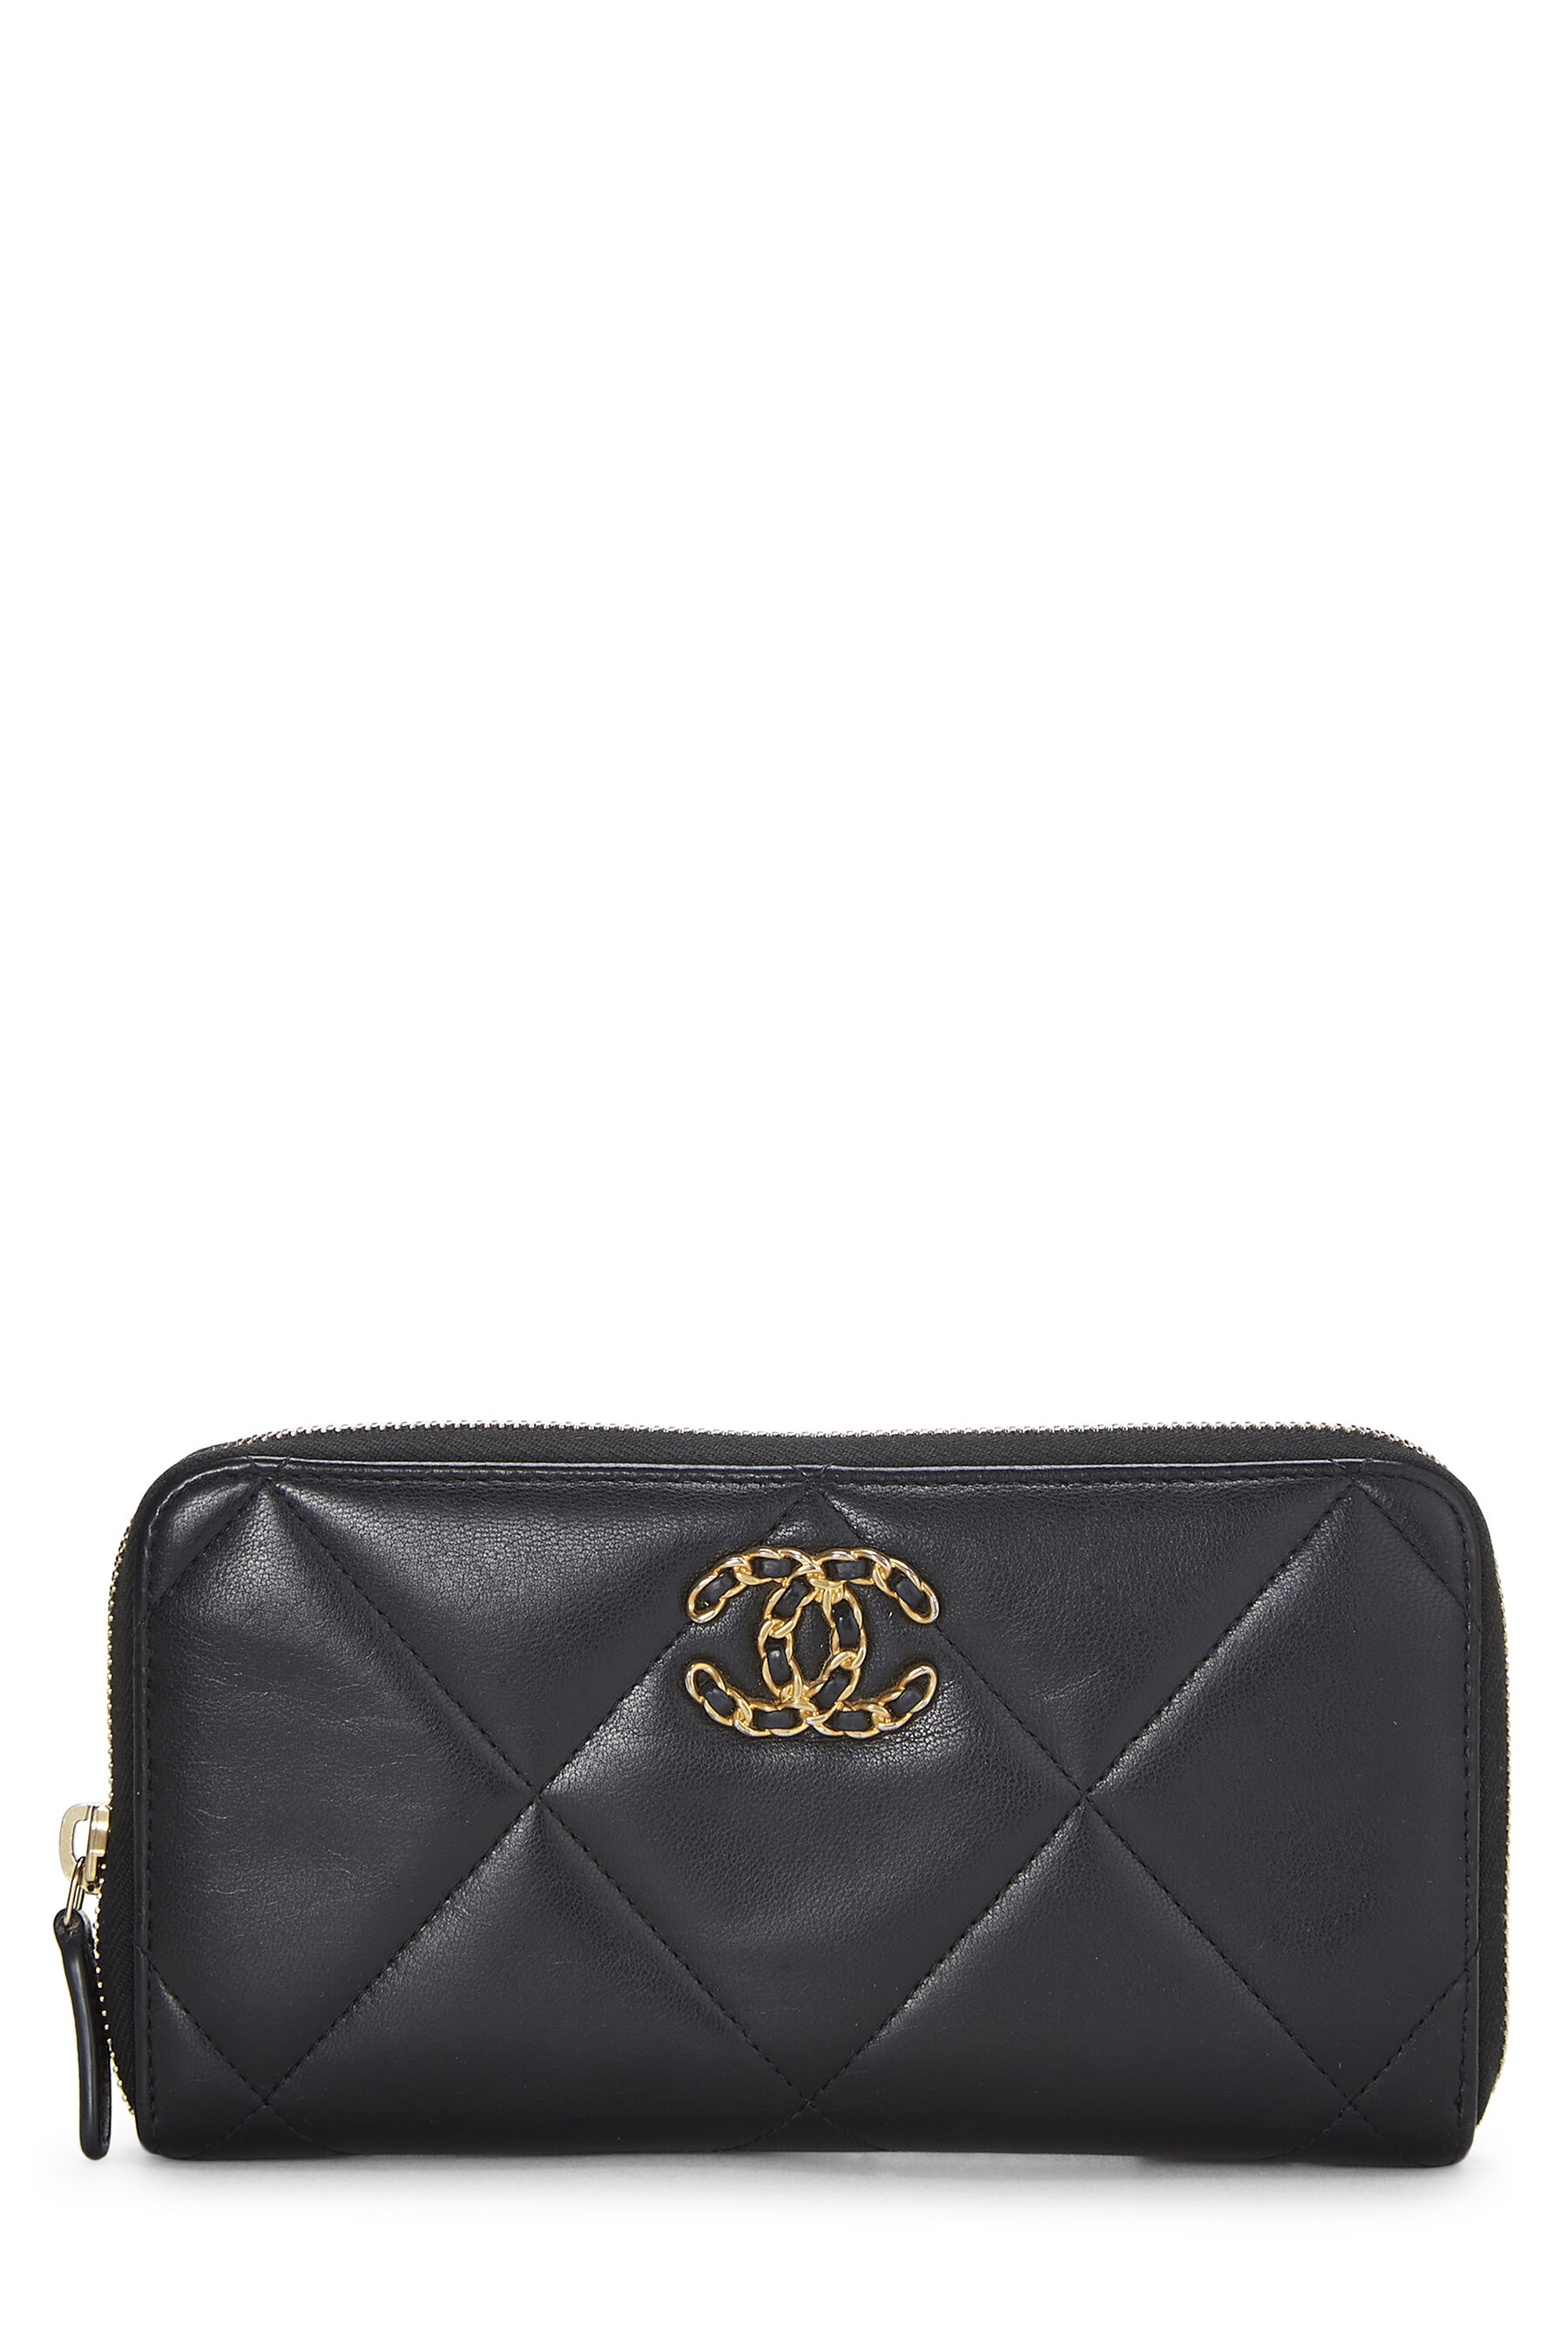 Chanel Black Quilted Lambskin 19 Zip Around Wallet